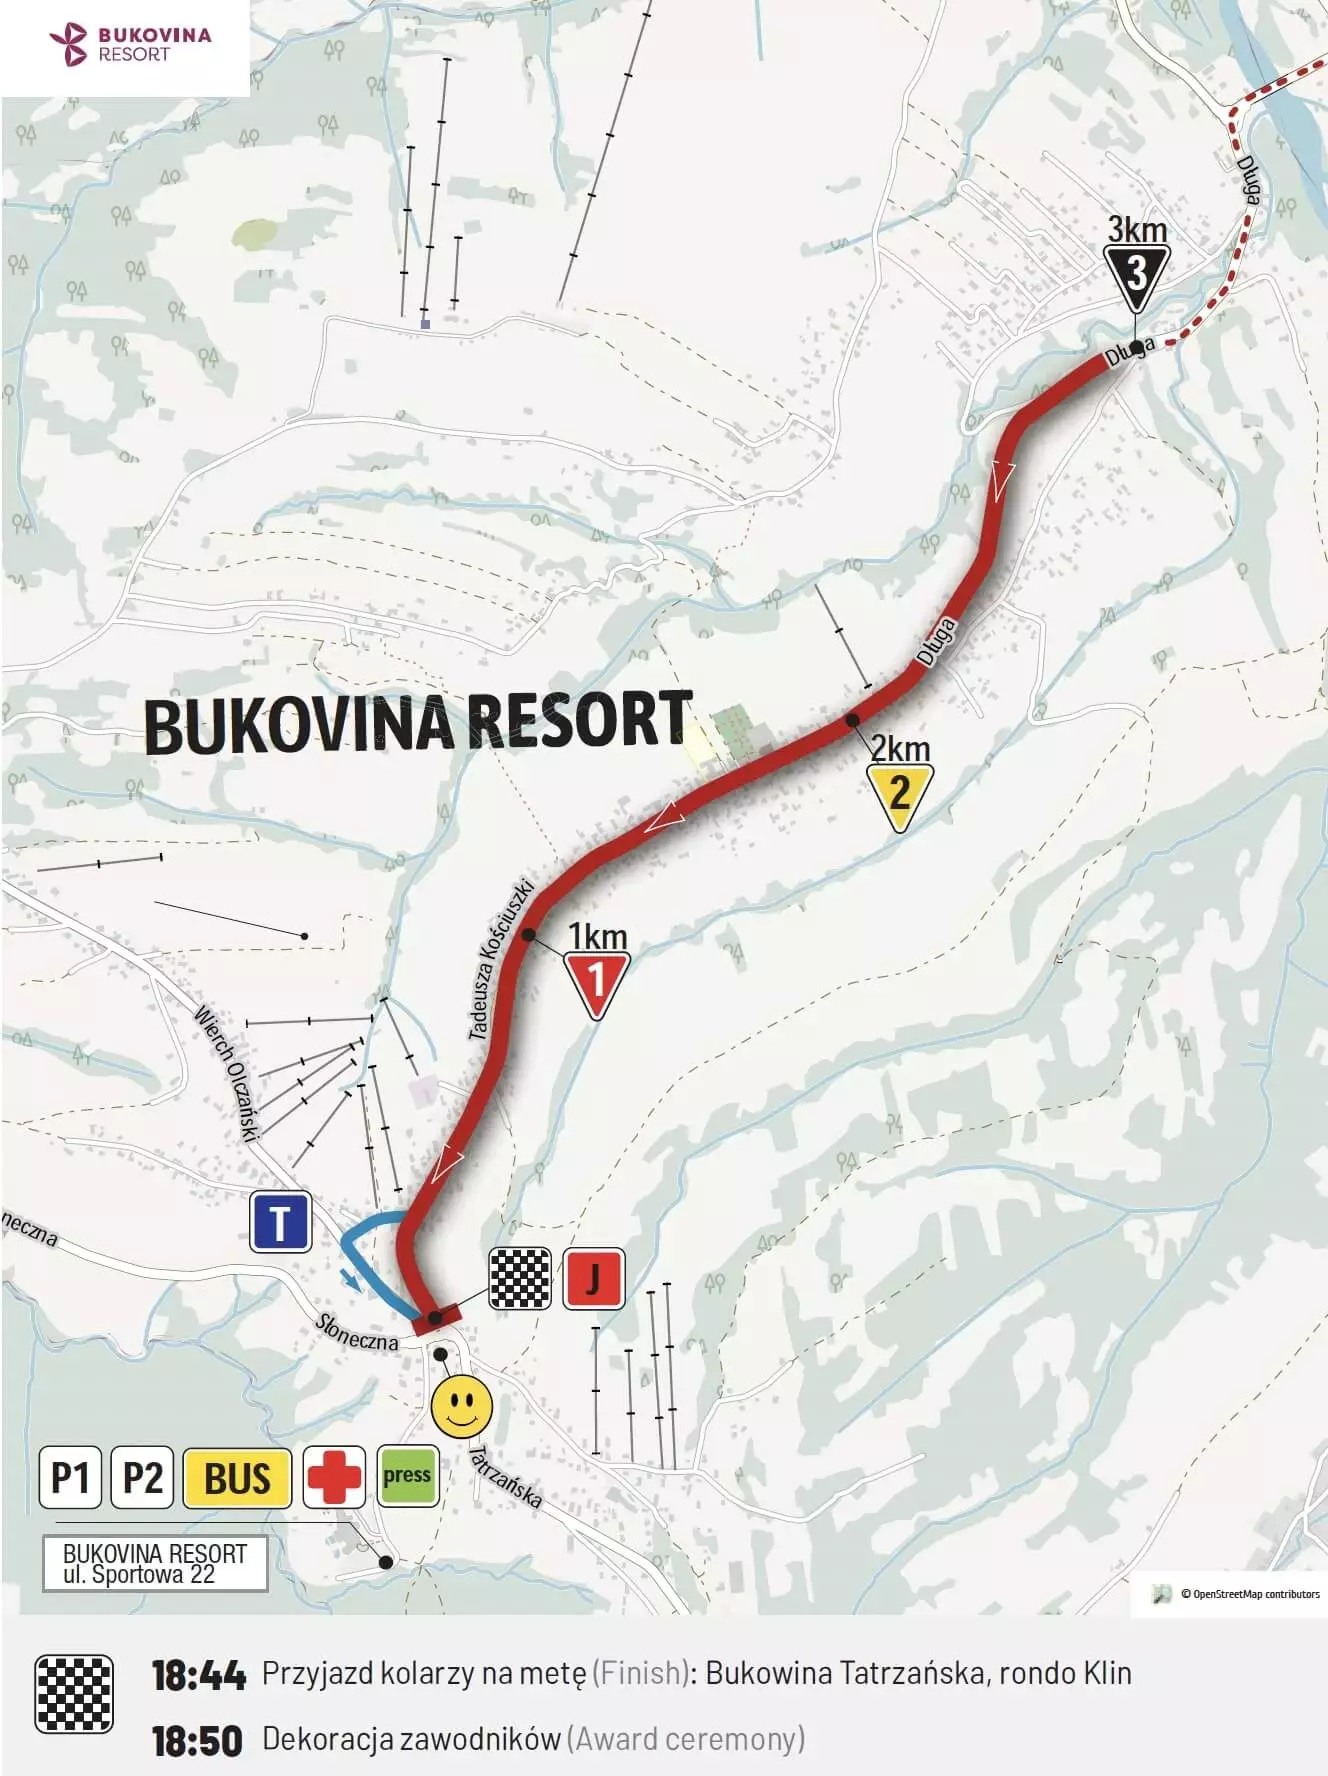 Bukovina Resort - Meta Tour de Pologne 2021